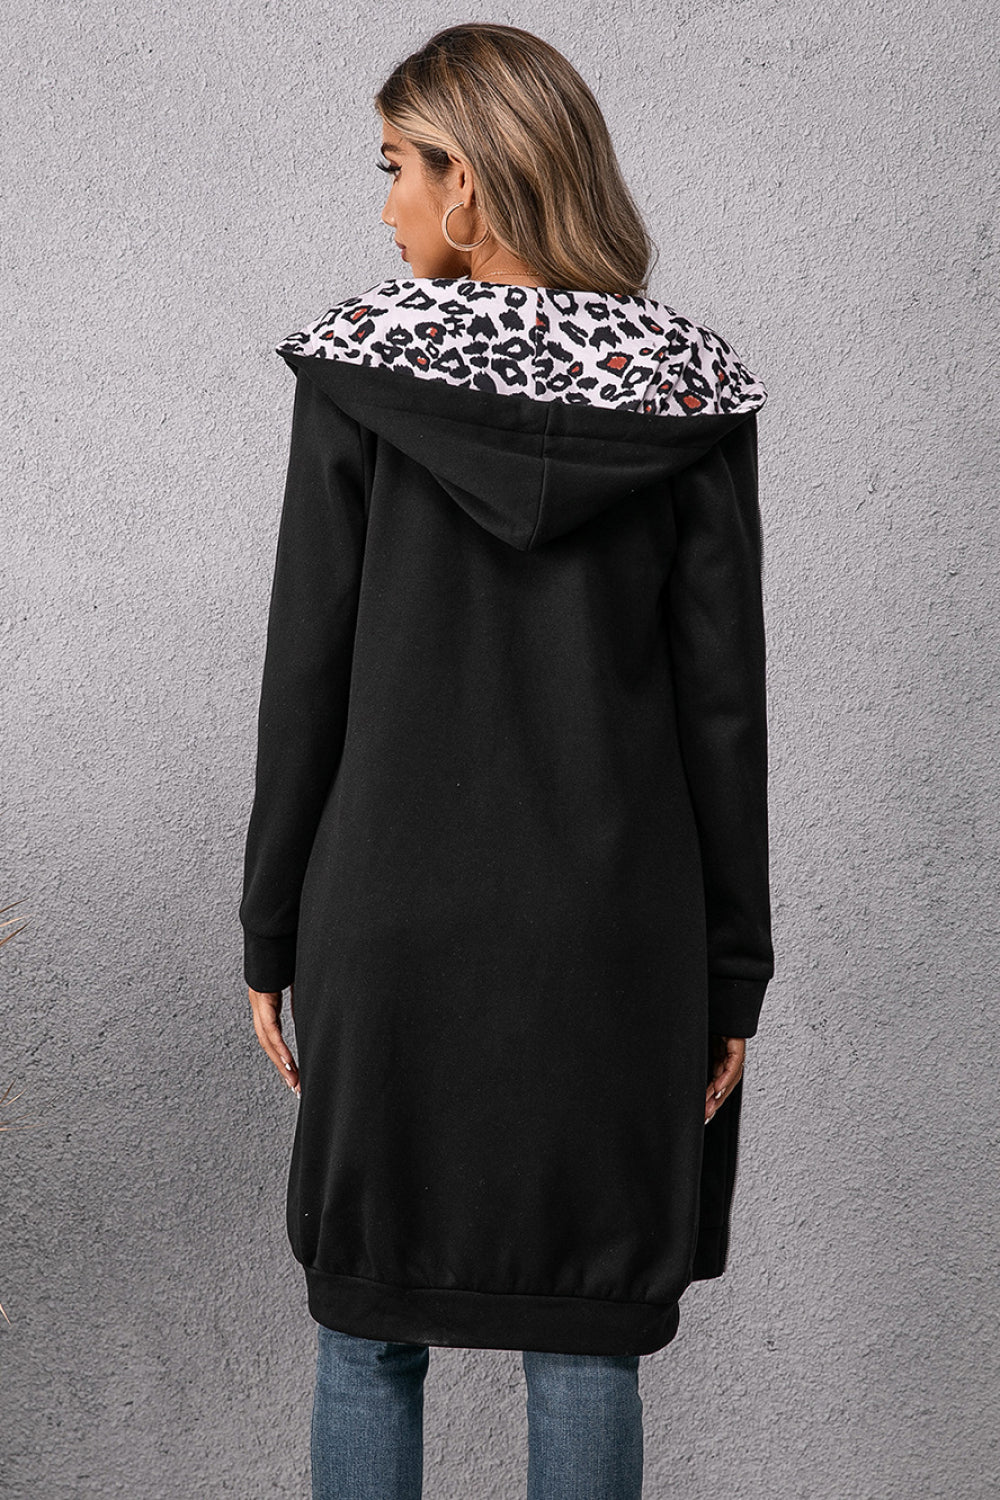 Women's Leopard Spliced Drawstring Zip Up Hoodie Size S-XL